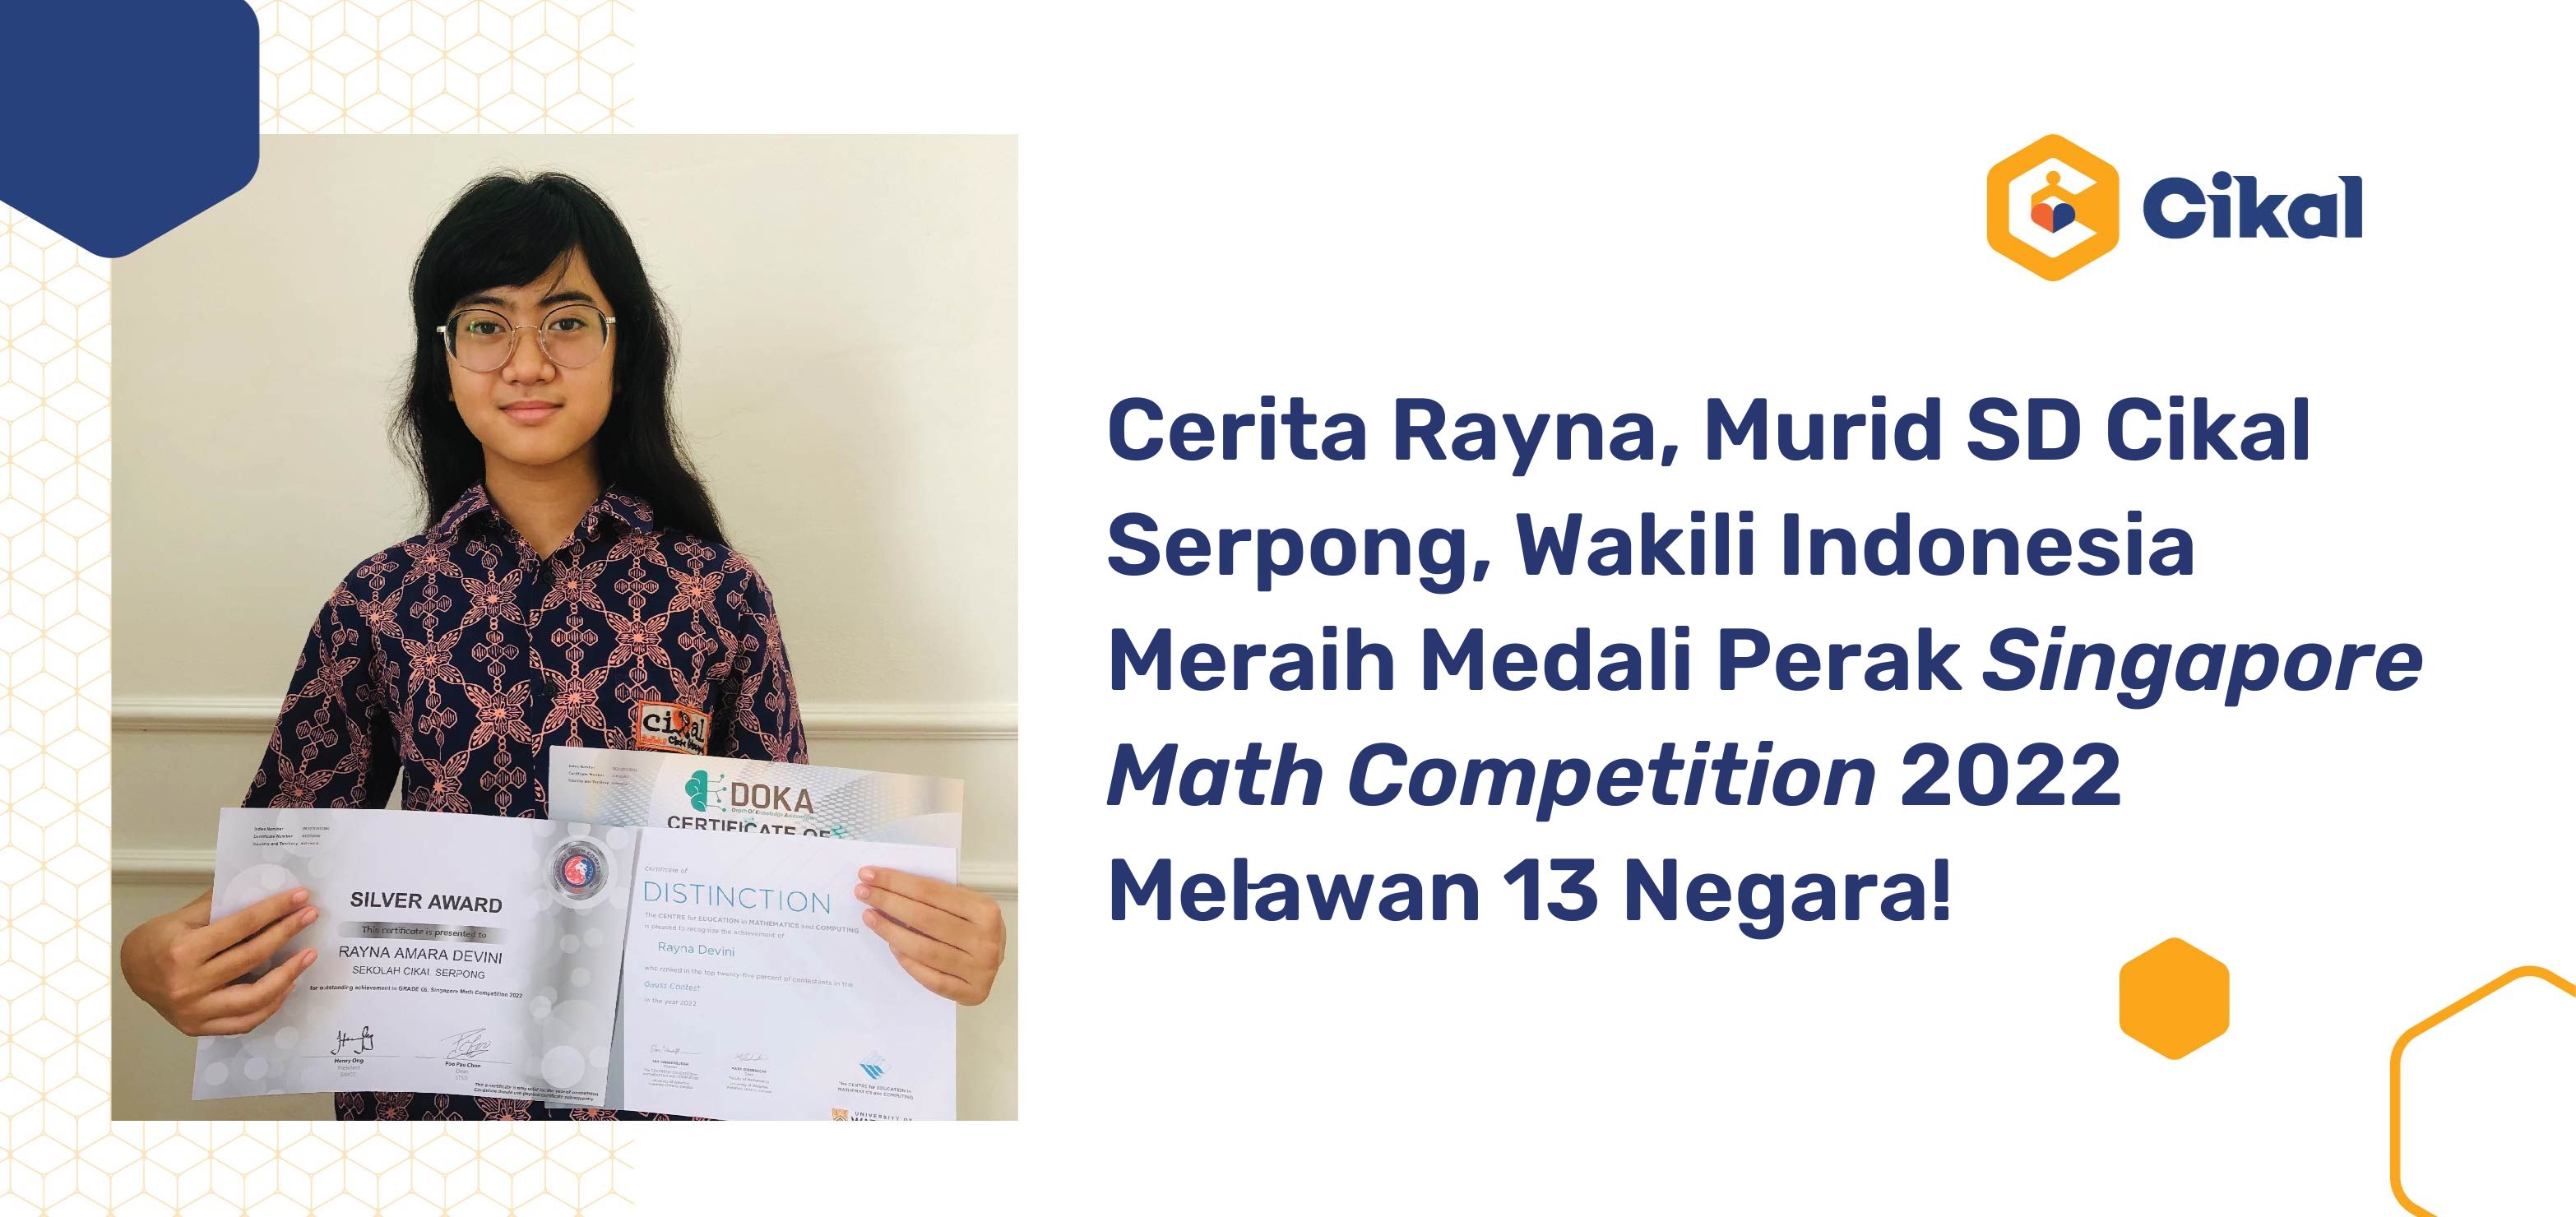 Cerita Rayna, Murid SD Cikal Serpong, Wakili Indonesia Meraih Medali Perak Singapore Math Competition 2022 Melawan 13 Negara!